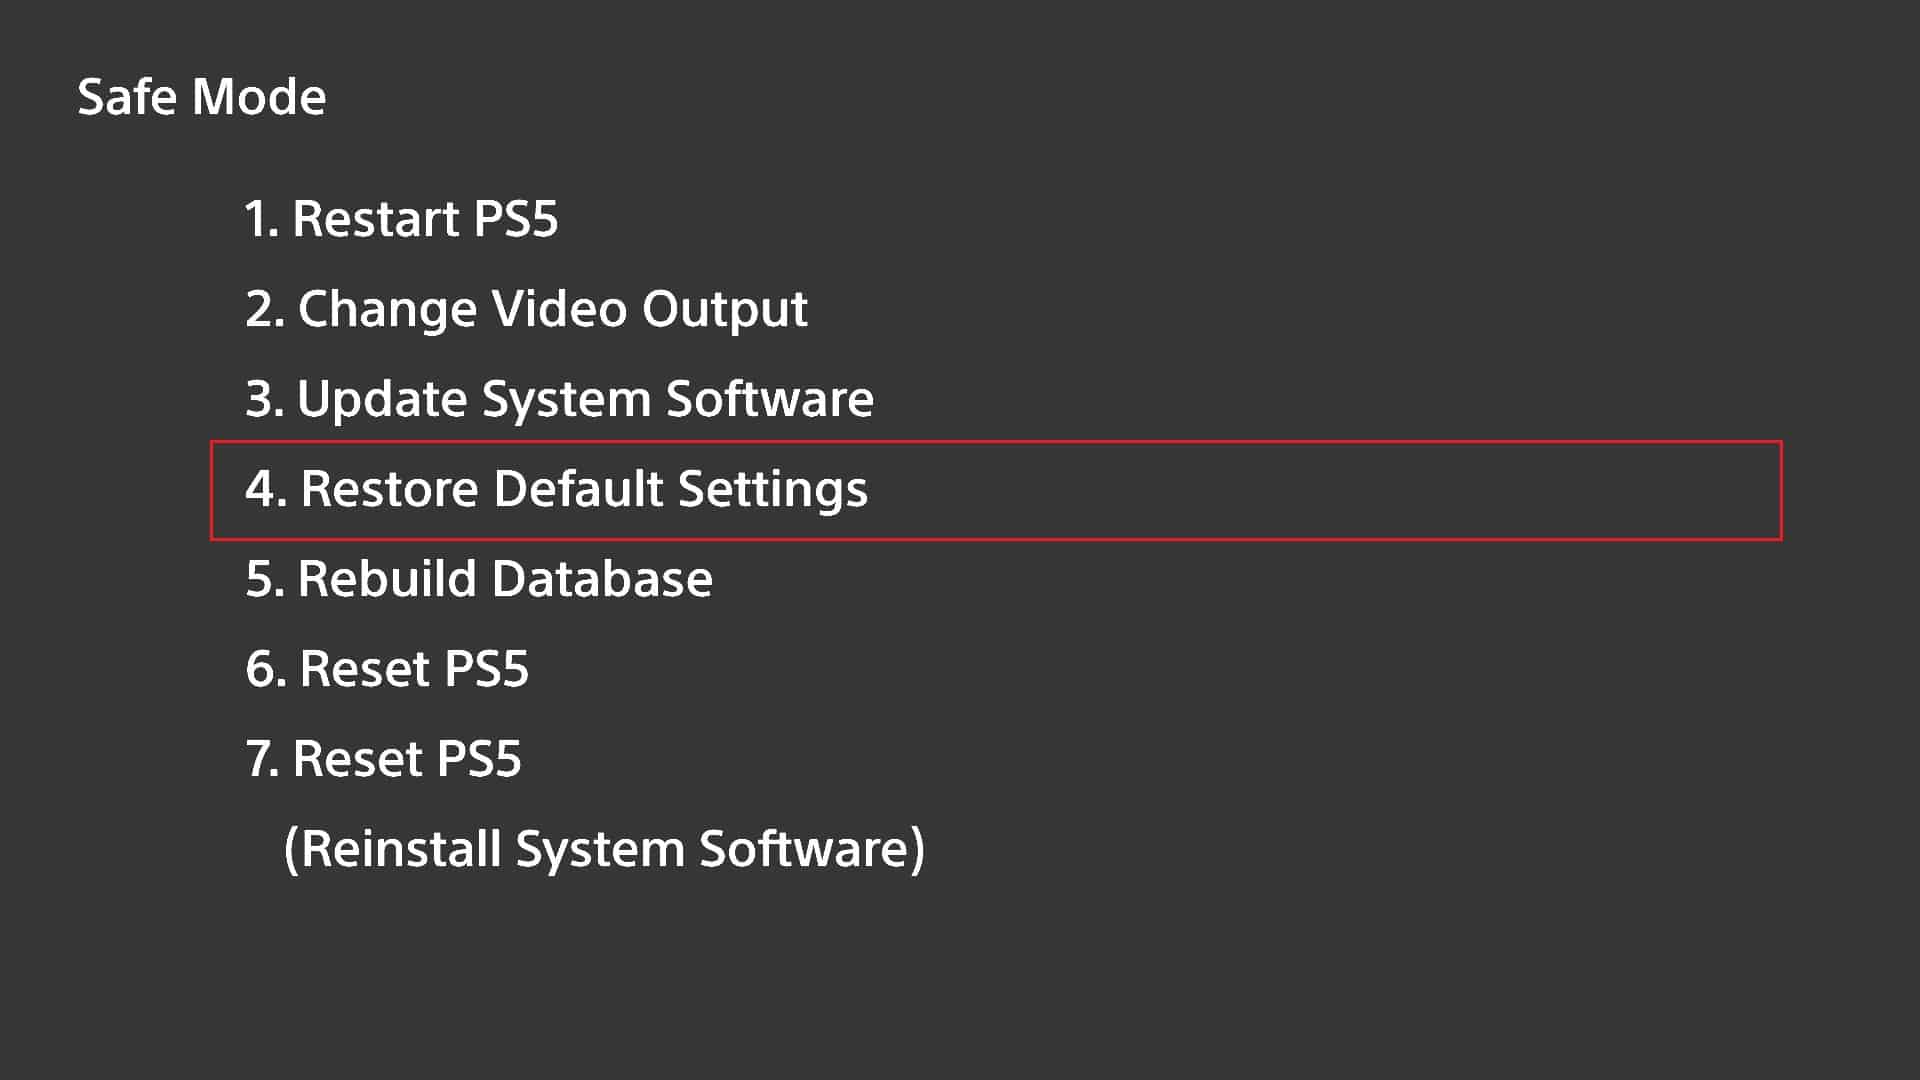 ps5 აღადგინა ნაგულისხმევი პარამეტრები უსაფრთხო რეჟიმში. შეასწორეთ PS5 მოციმციმე თეთრი სინათლის შეცდომა